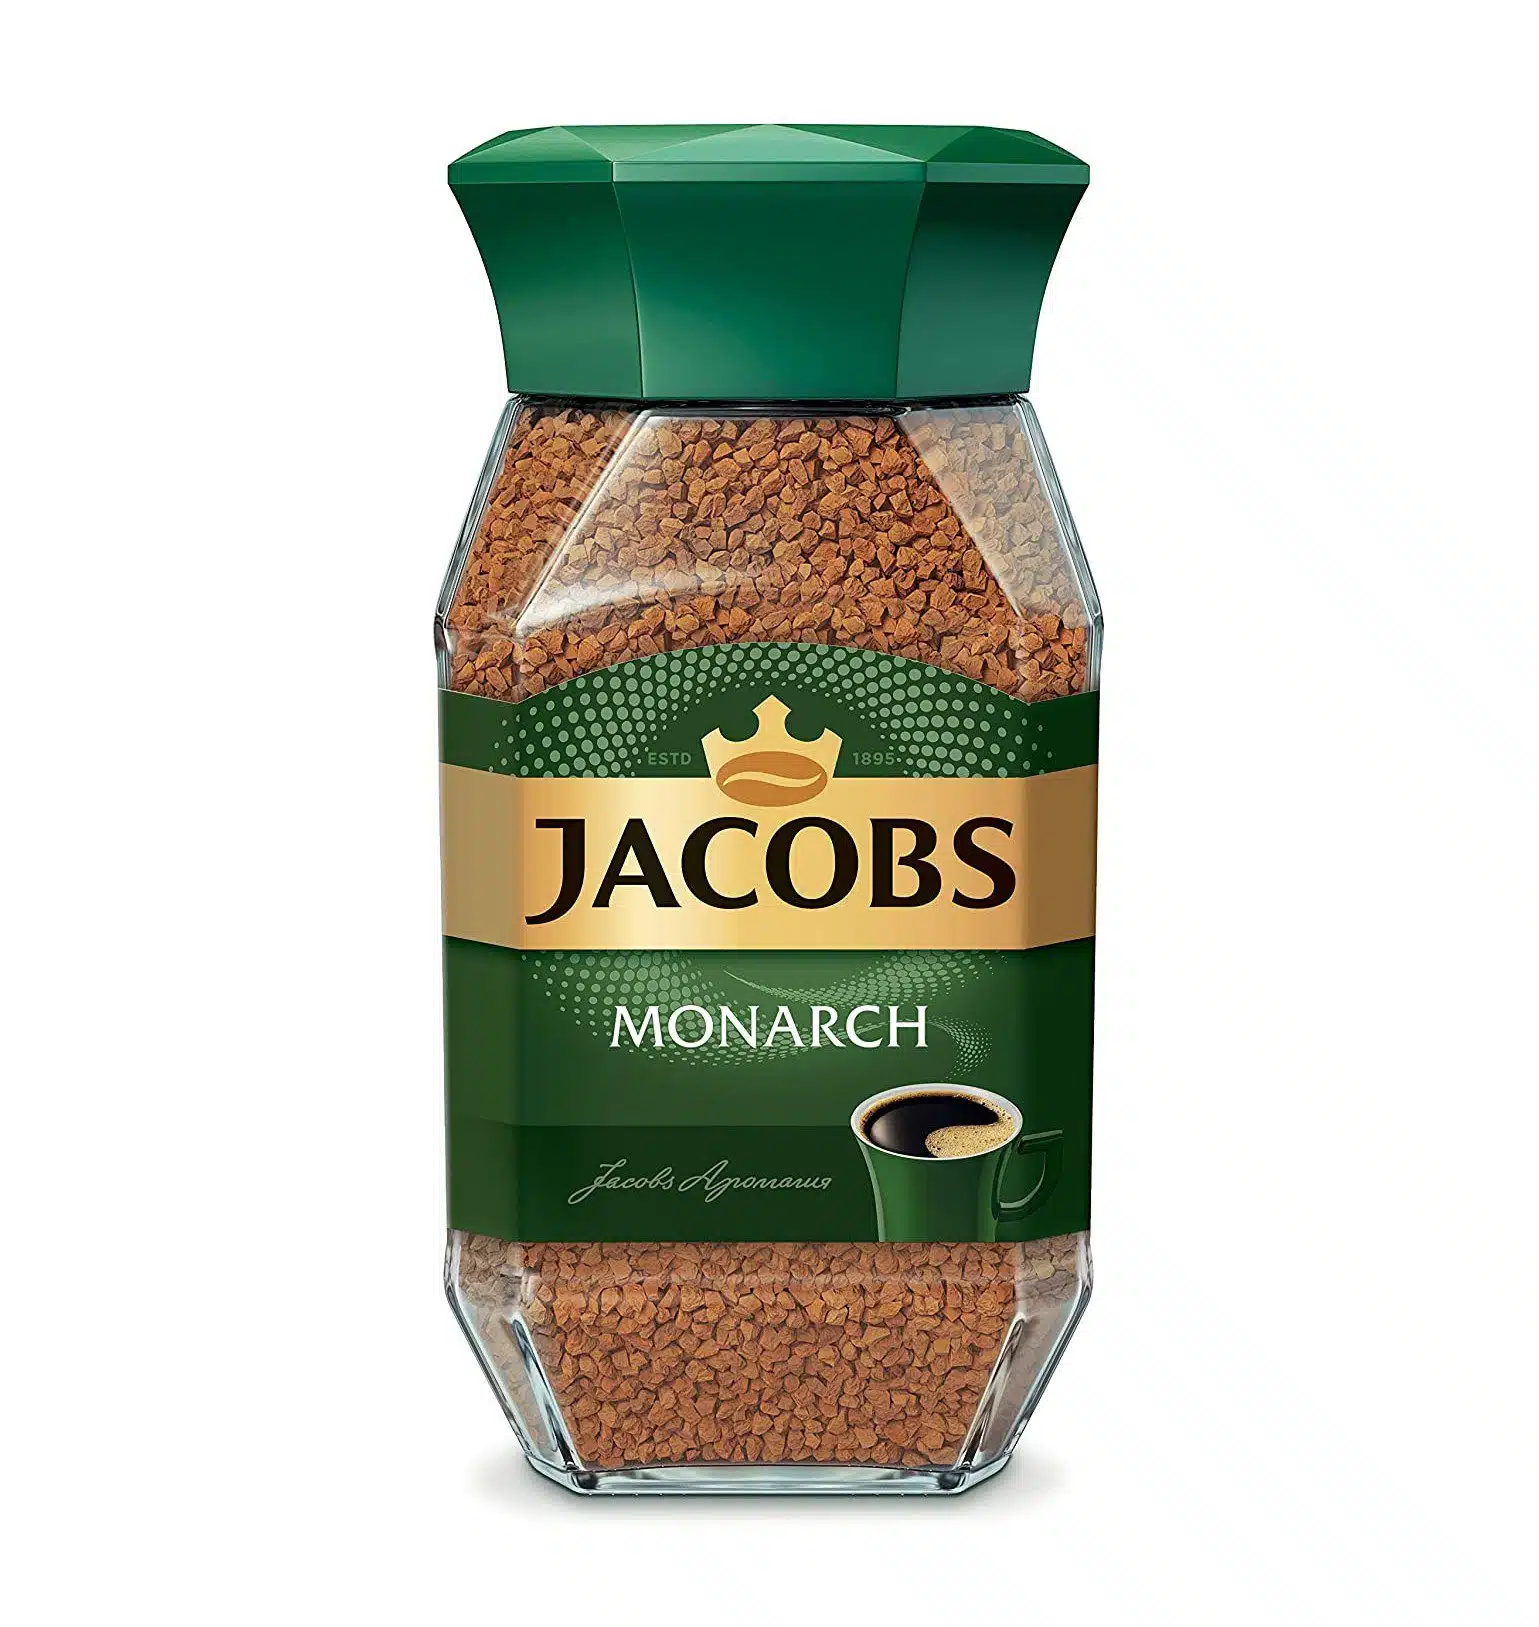  قهوه فوری جاکوبز مدل MONARCH وزن 95 گرم